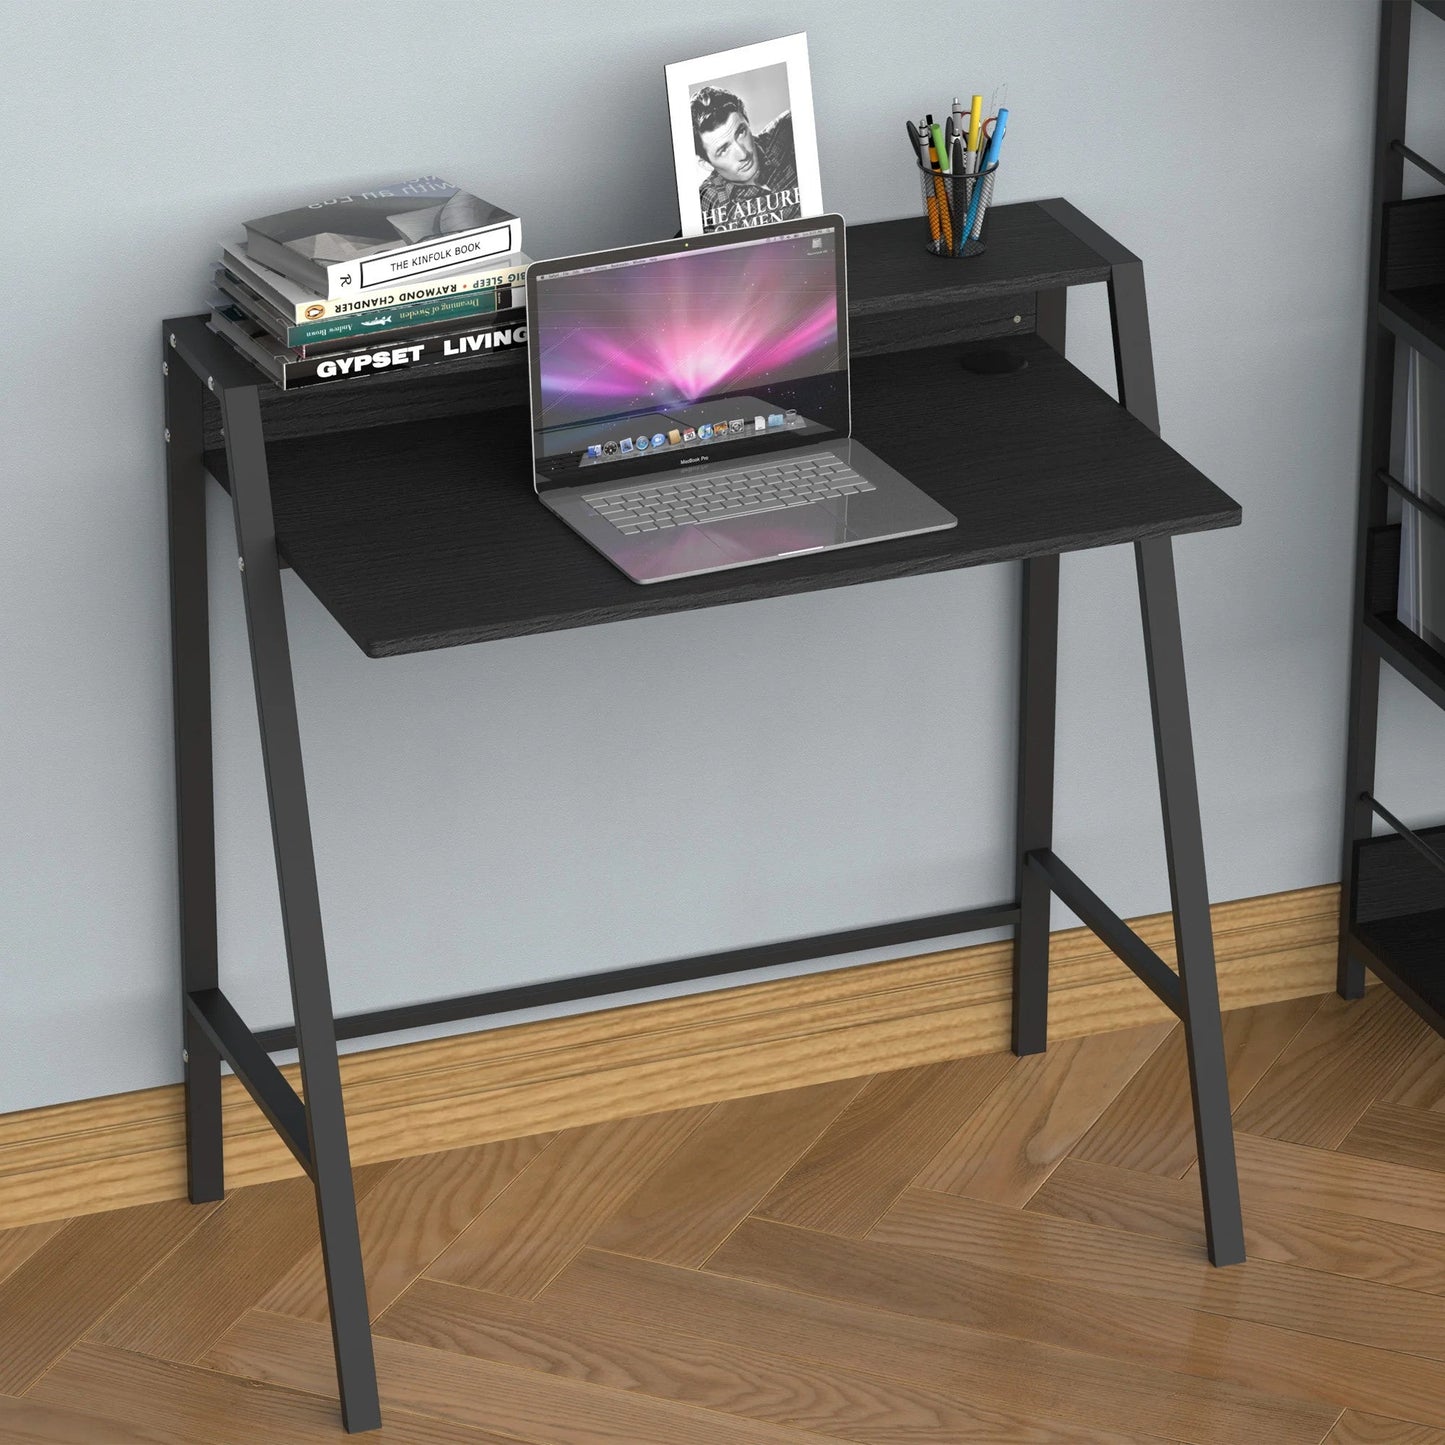 ProperAV Computer Desk with Elevated Storage Shelf - maplin.co.uk